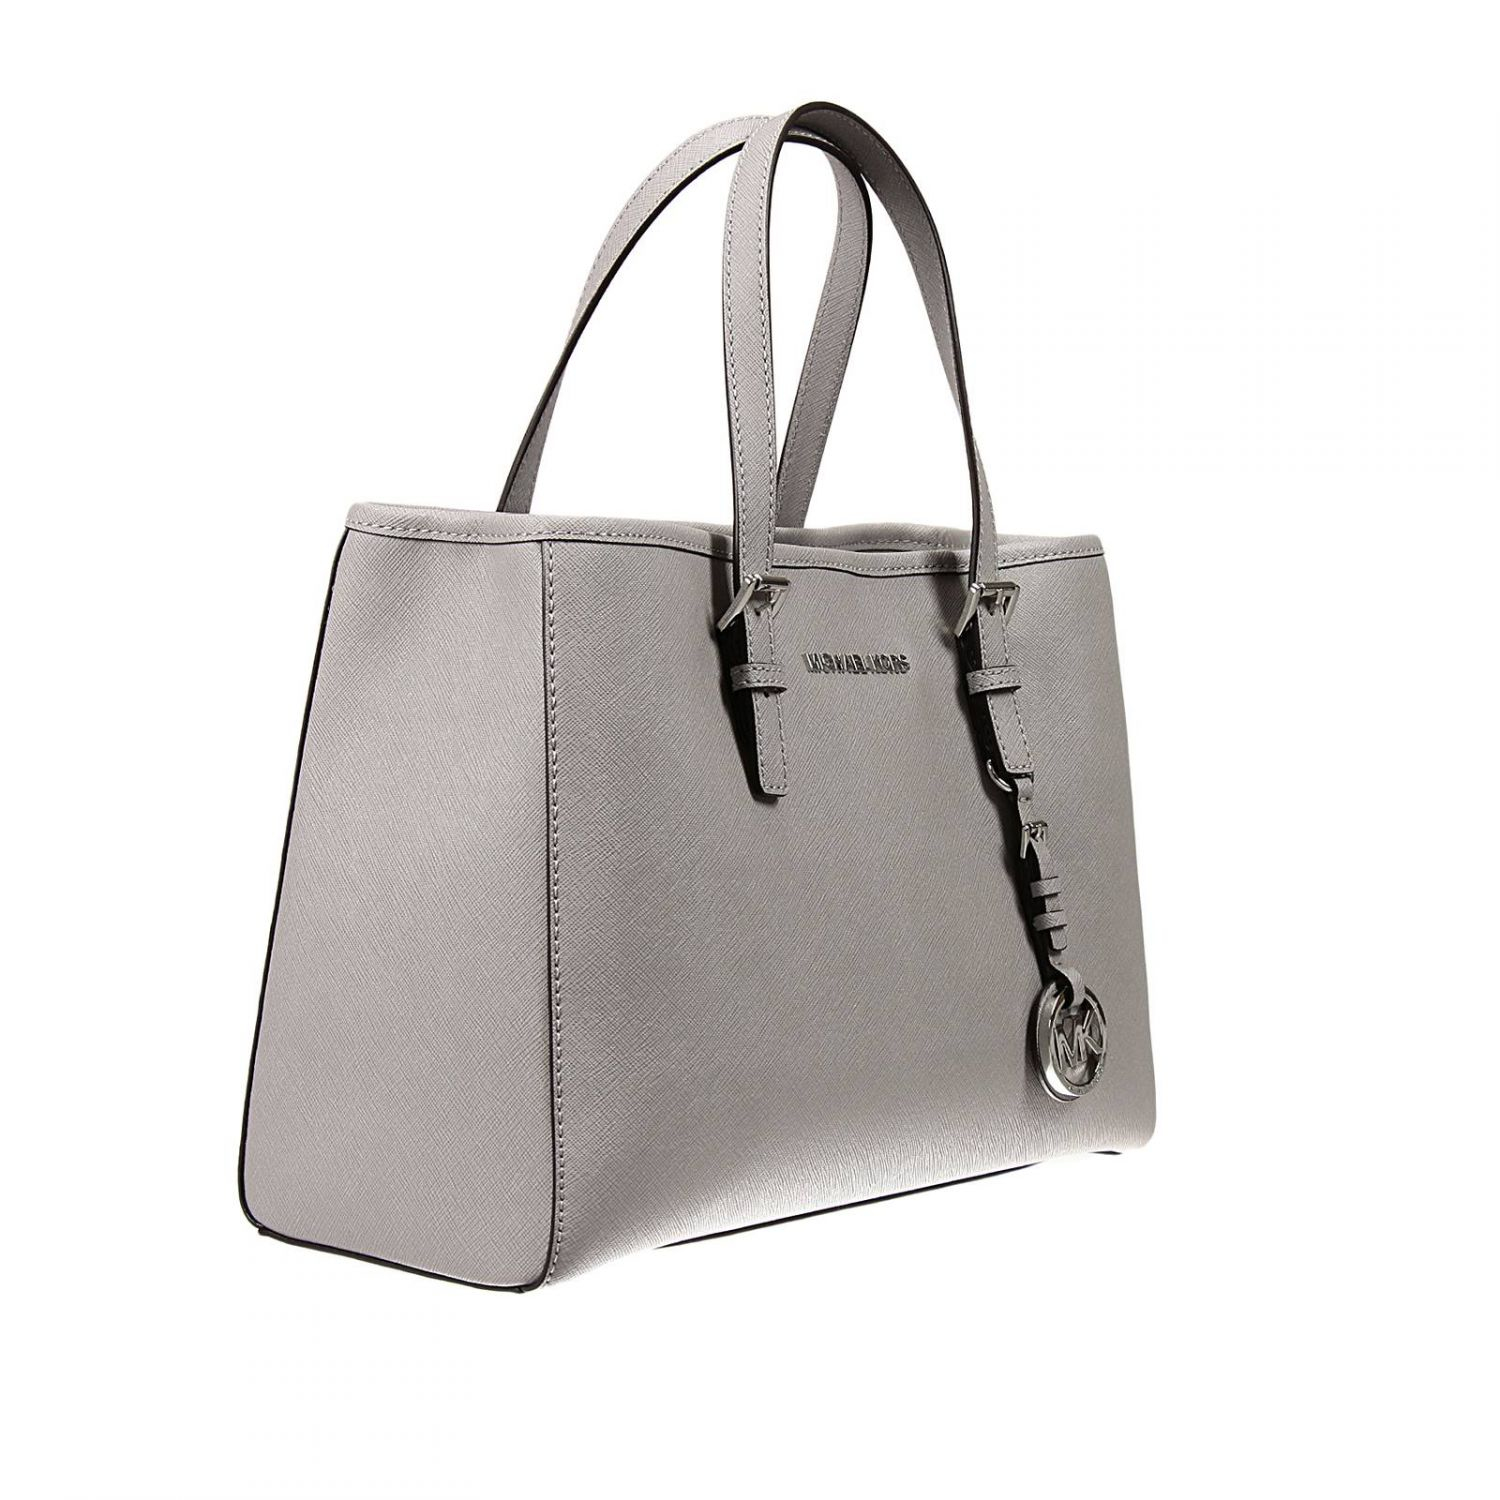 Michael kors Handbag Woman in Gray | Lyst